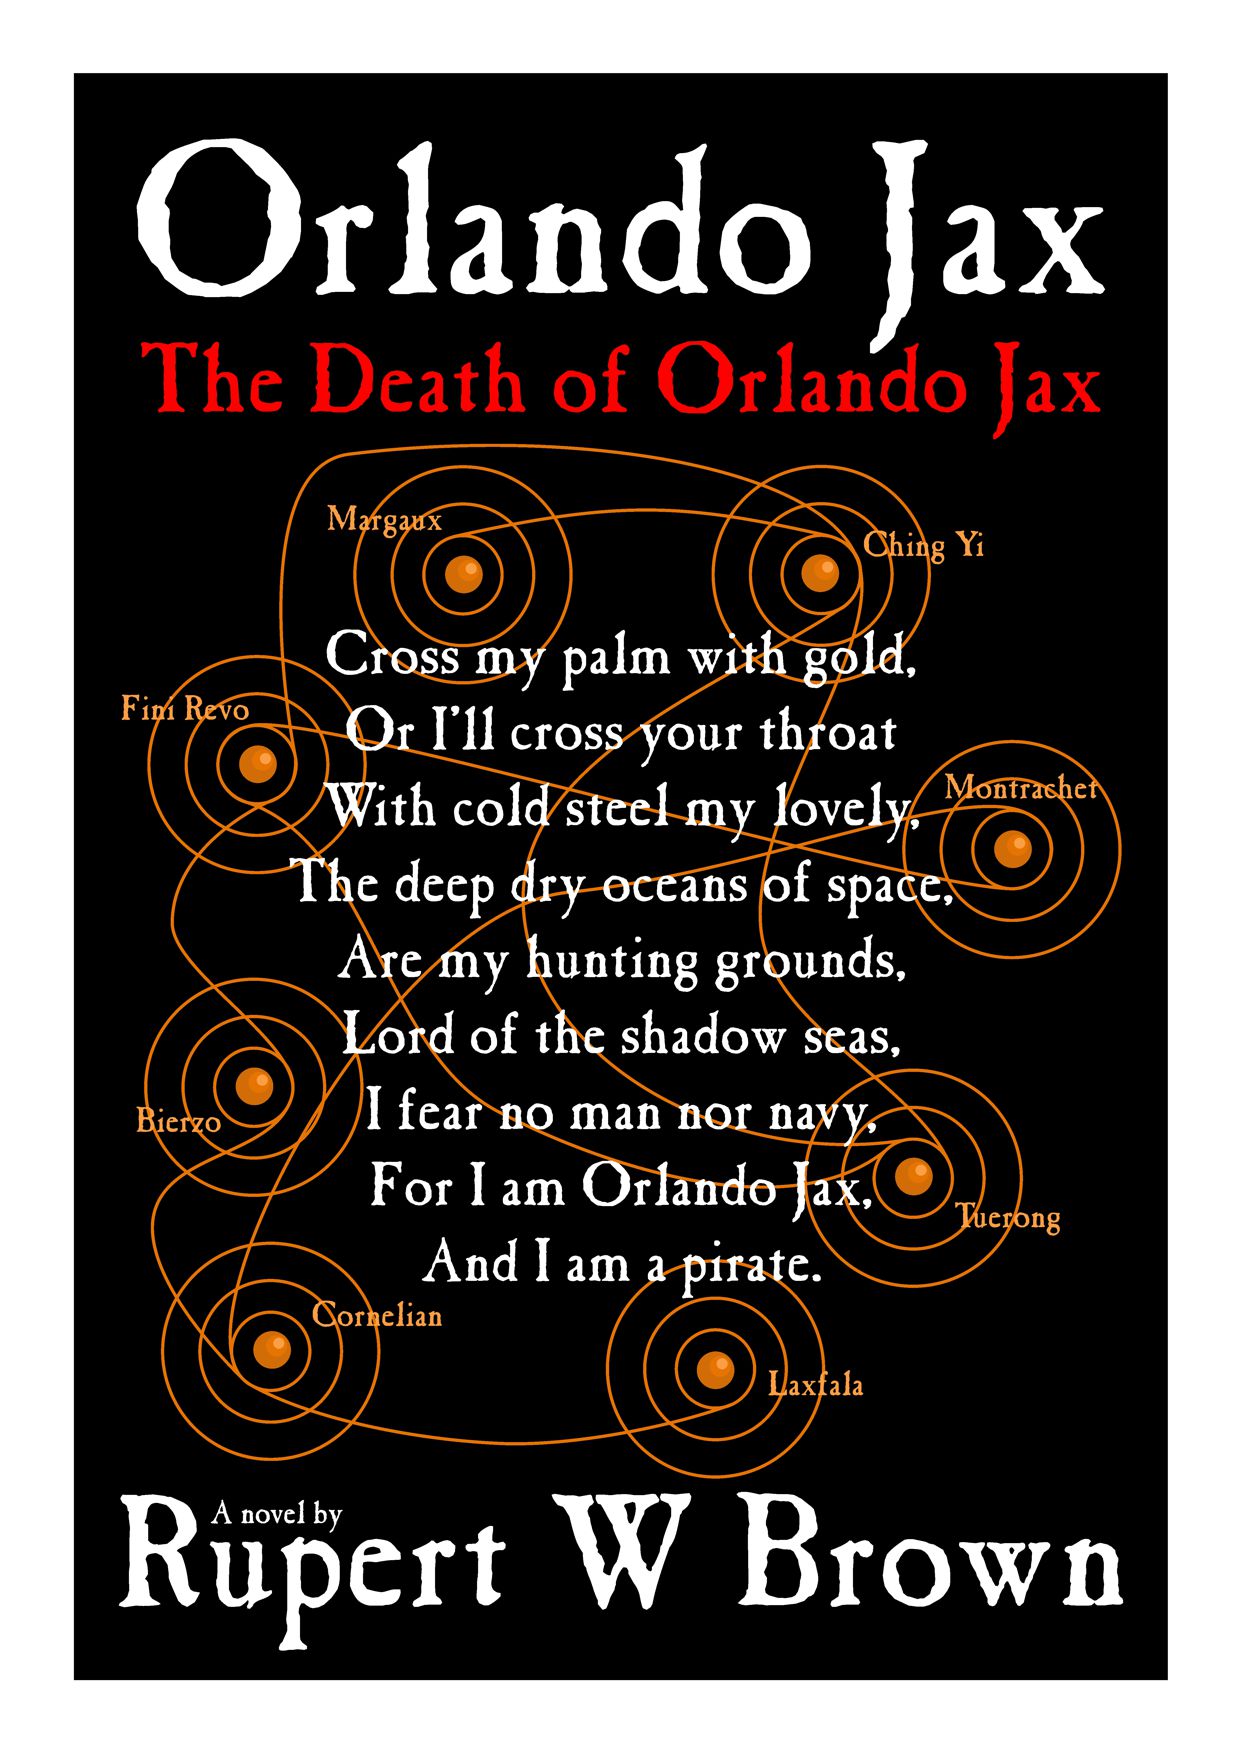 The cover of the book Orlando Jax - The Death of Orlando Jax